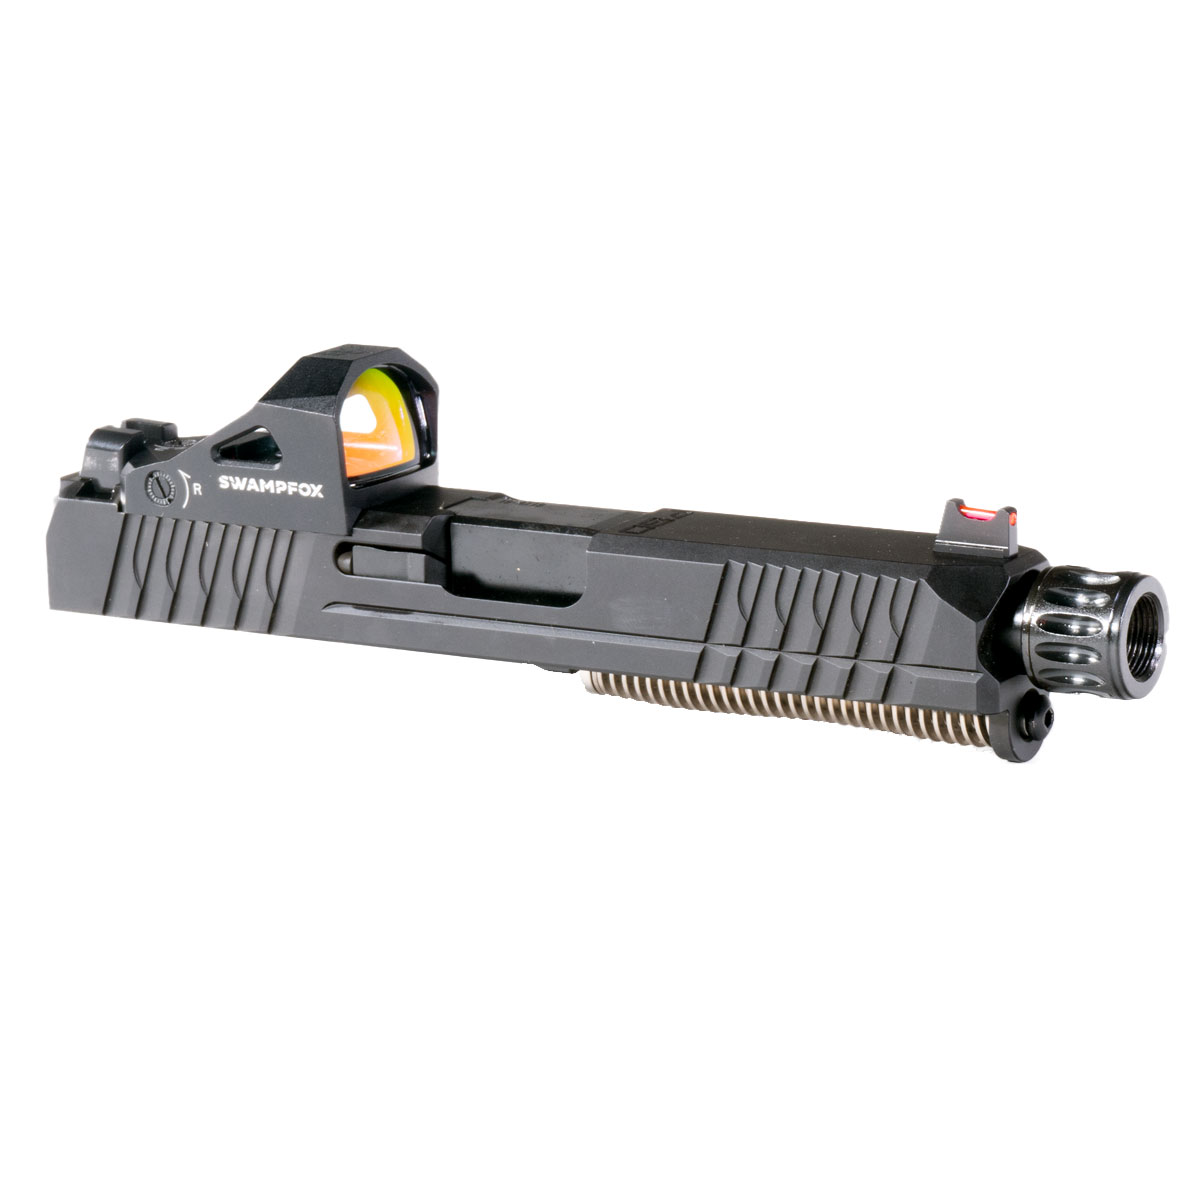 DTT 'Pouli w/ Swampfox Justice RMR' 9mm Complete Slide Kit - Glock 19 Gen 1-3 Compatible
